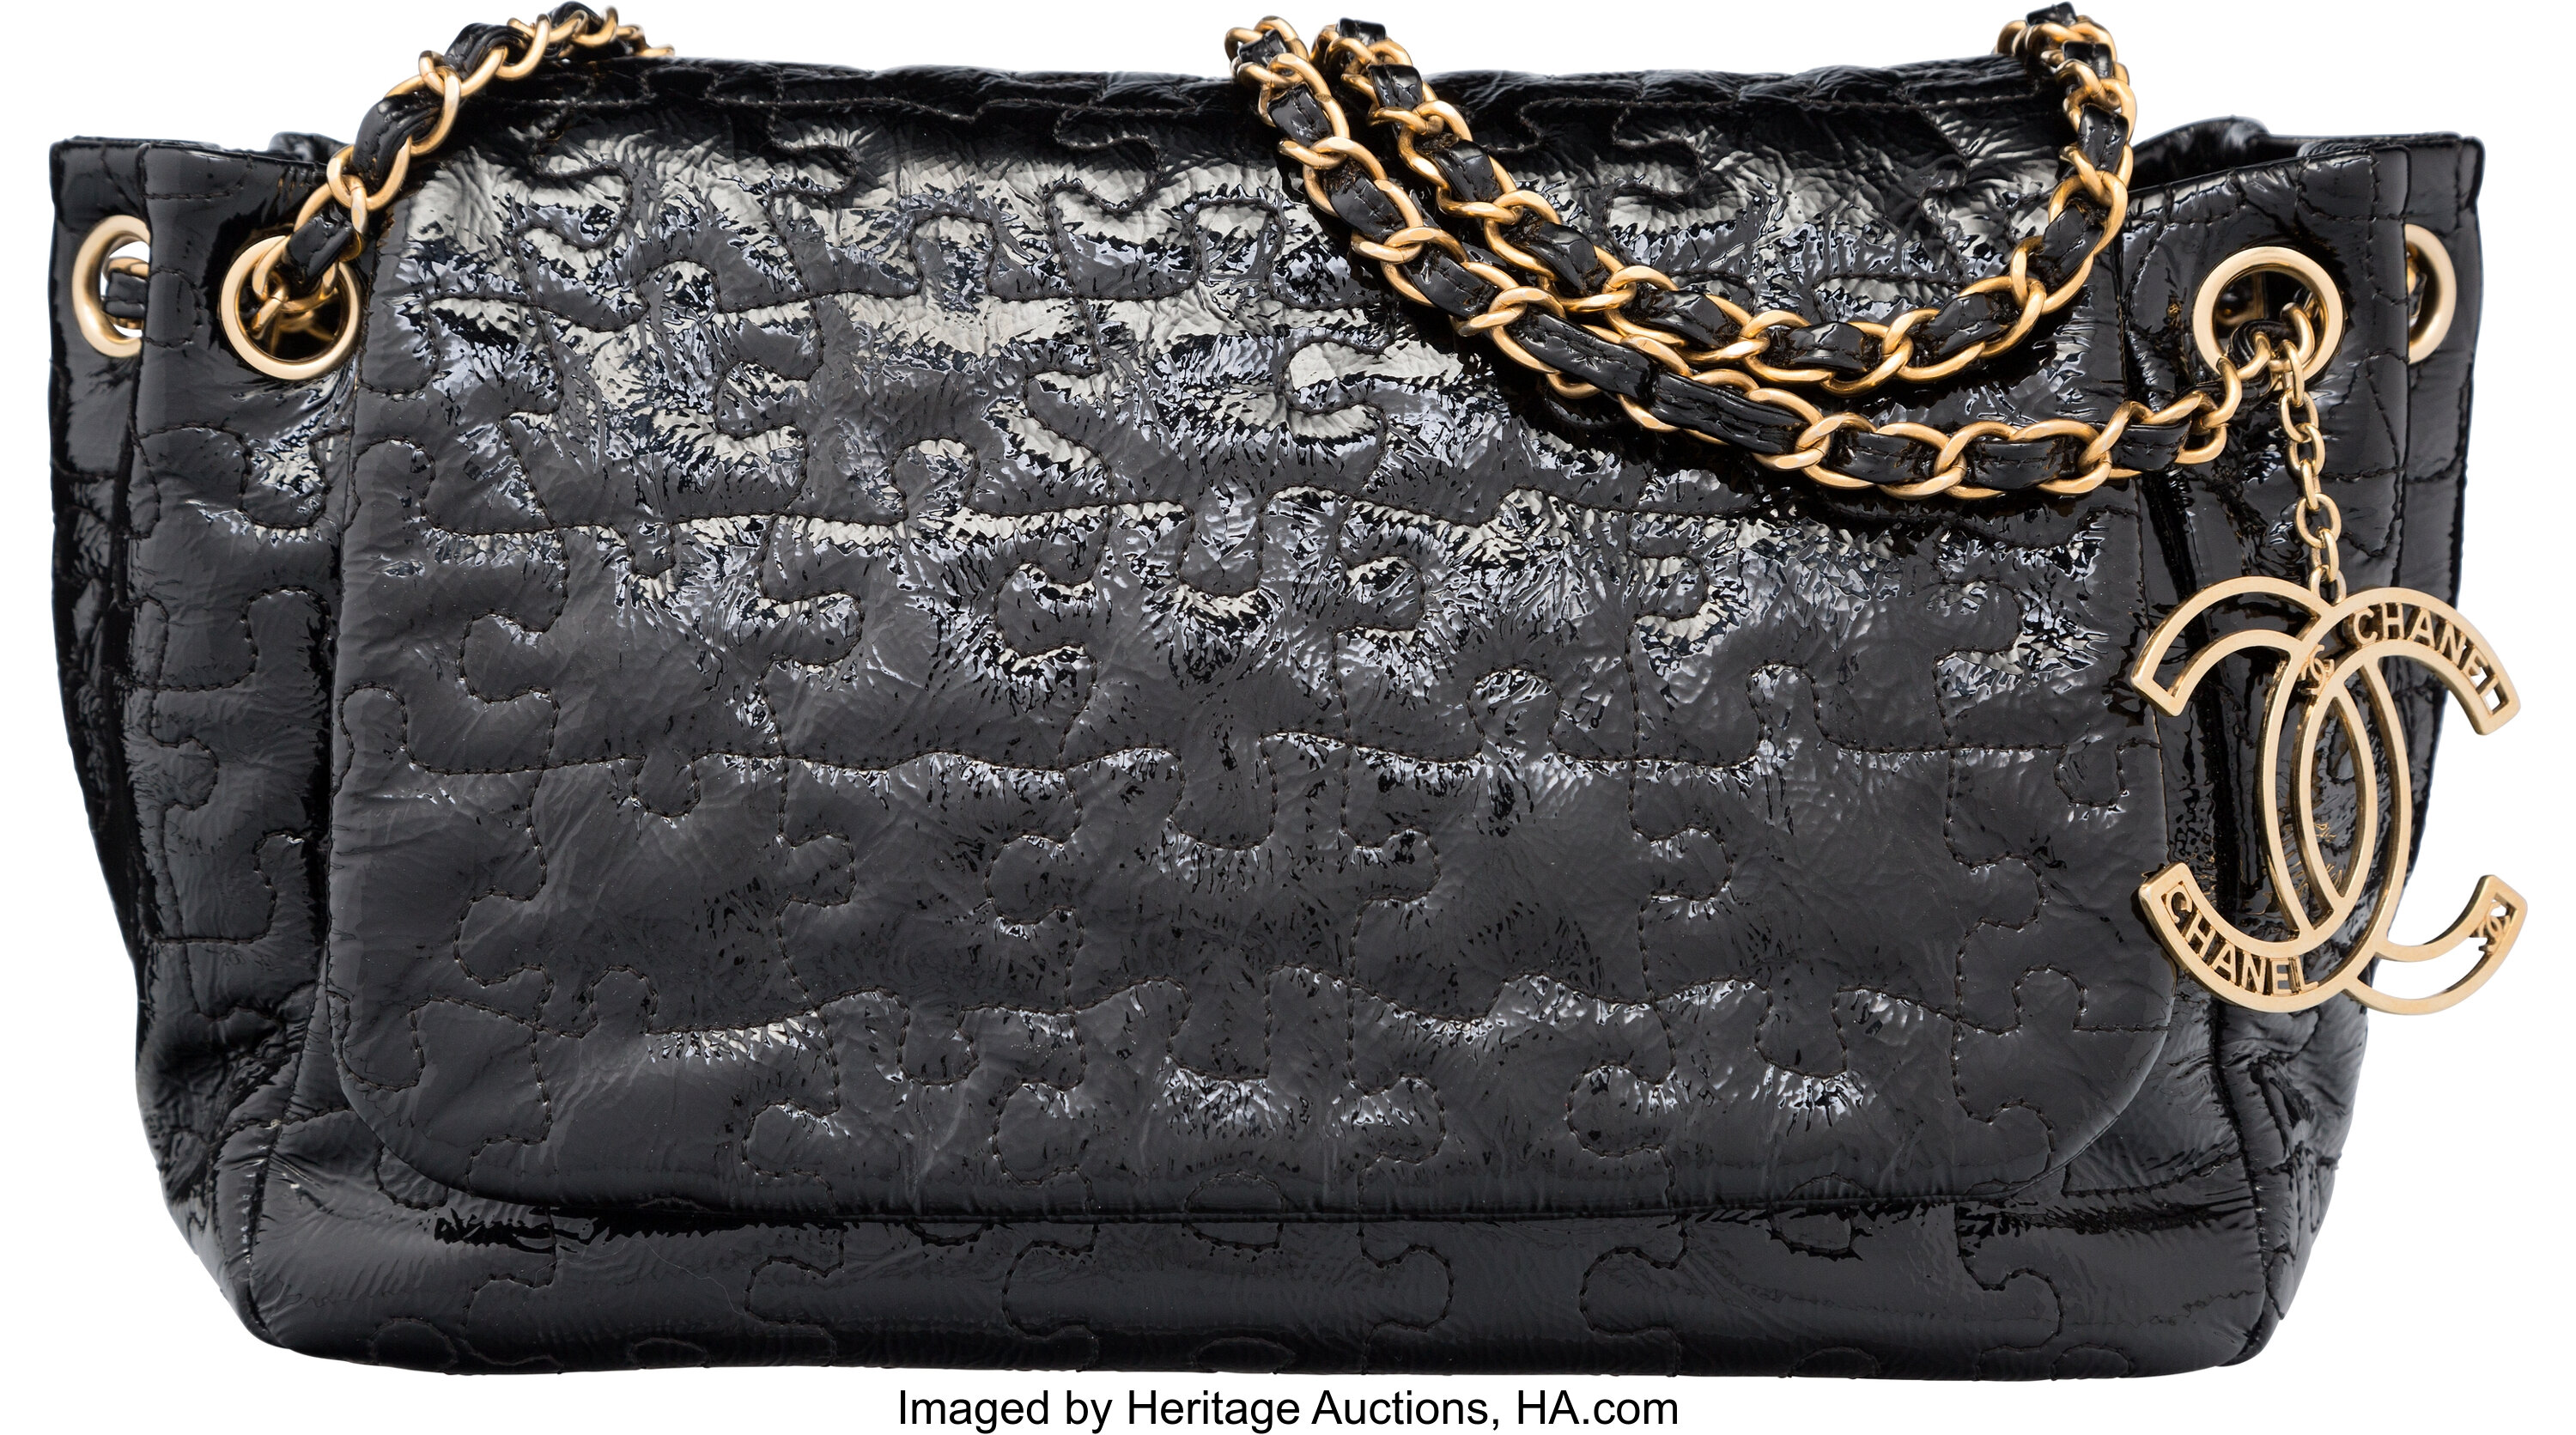 Chanel Patent Puzzle Tote - Black Totes, Handbags - CHA896622